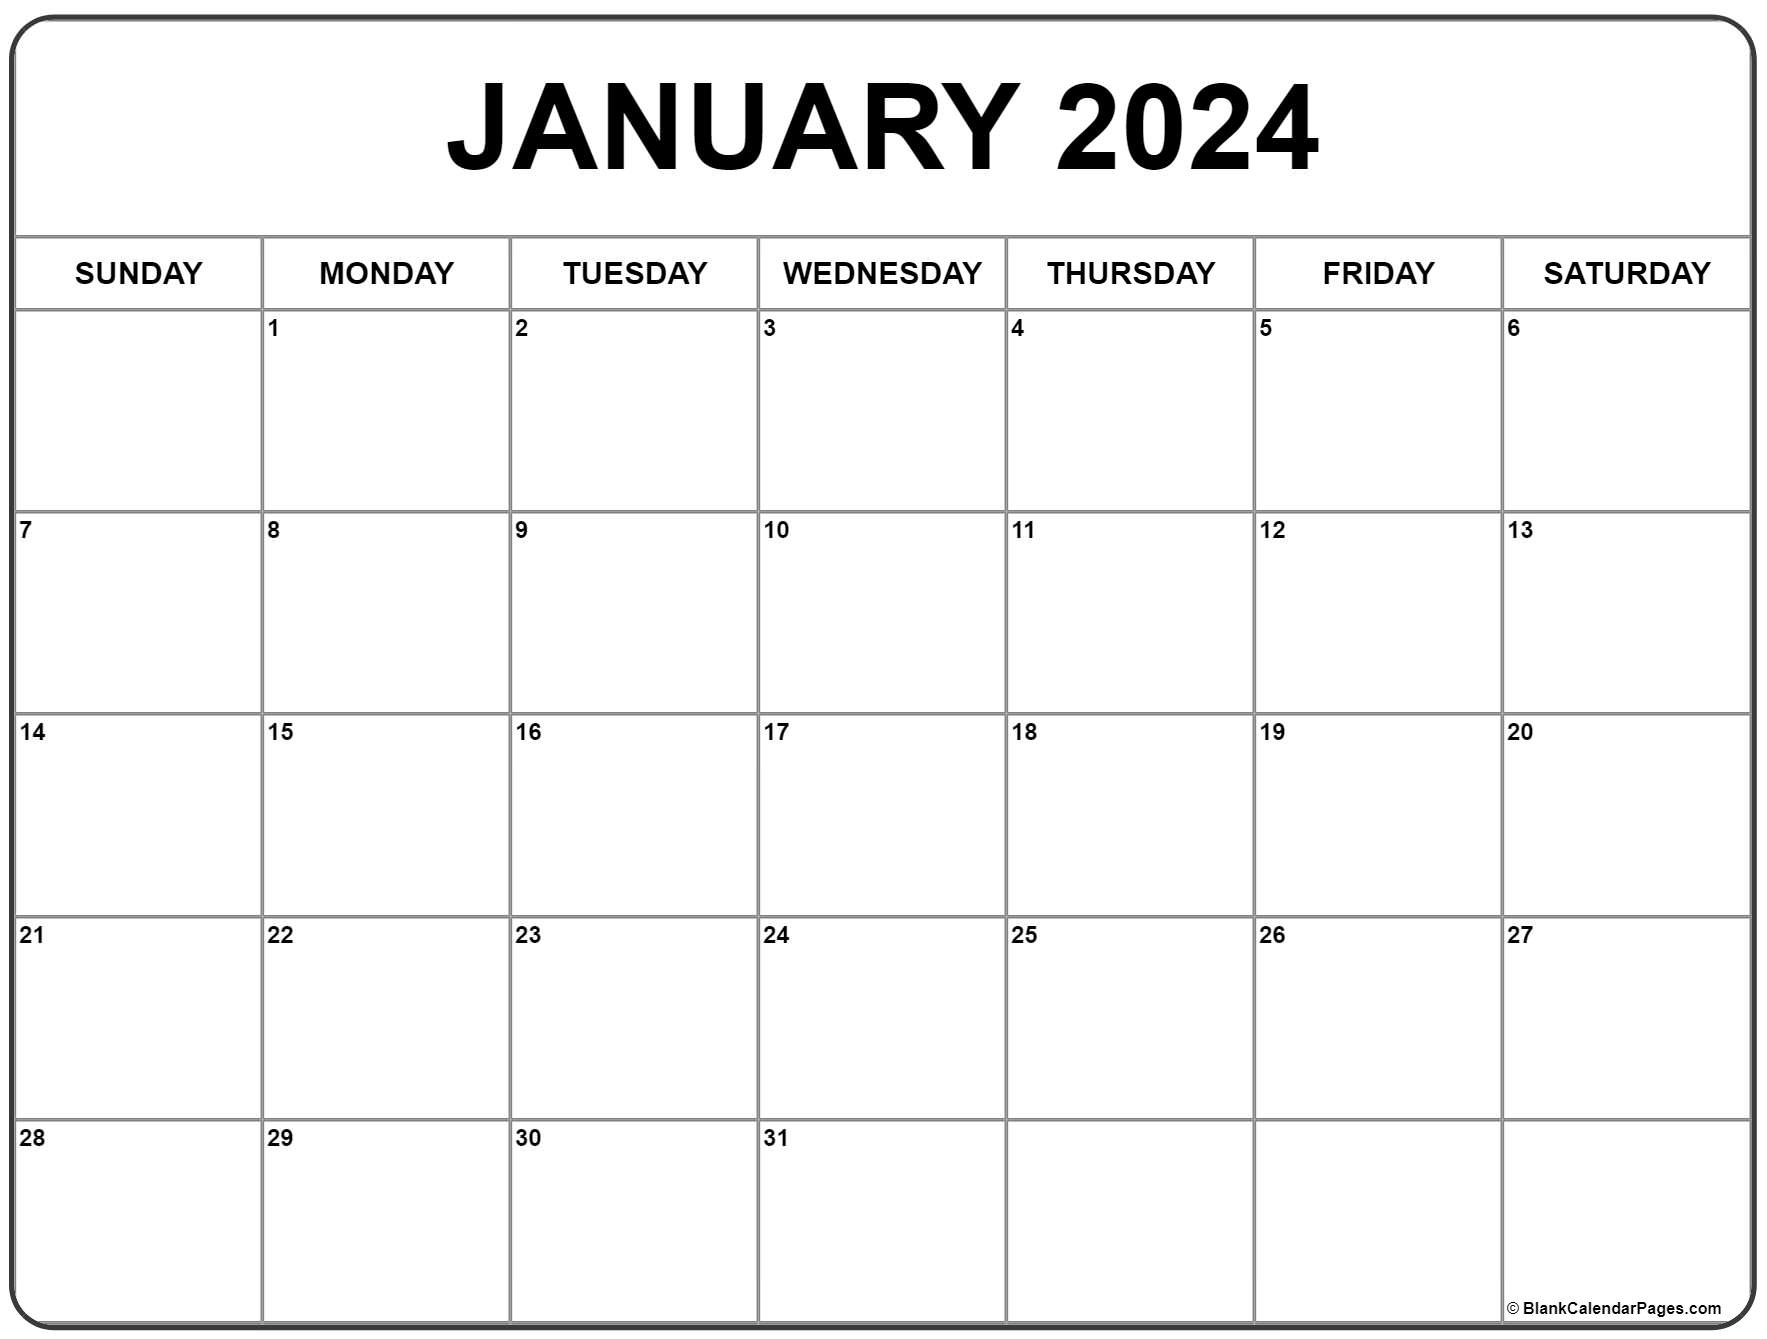 January 2024 Calendar | Free Printable Calendar for Printable Monthly Calendar For January 2024